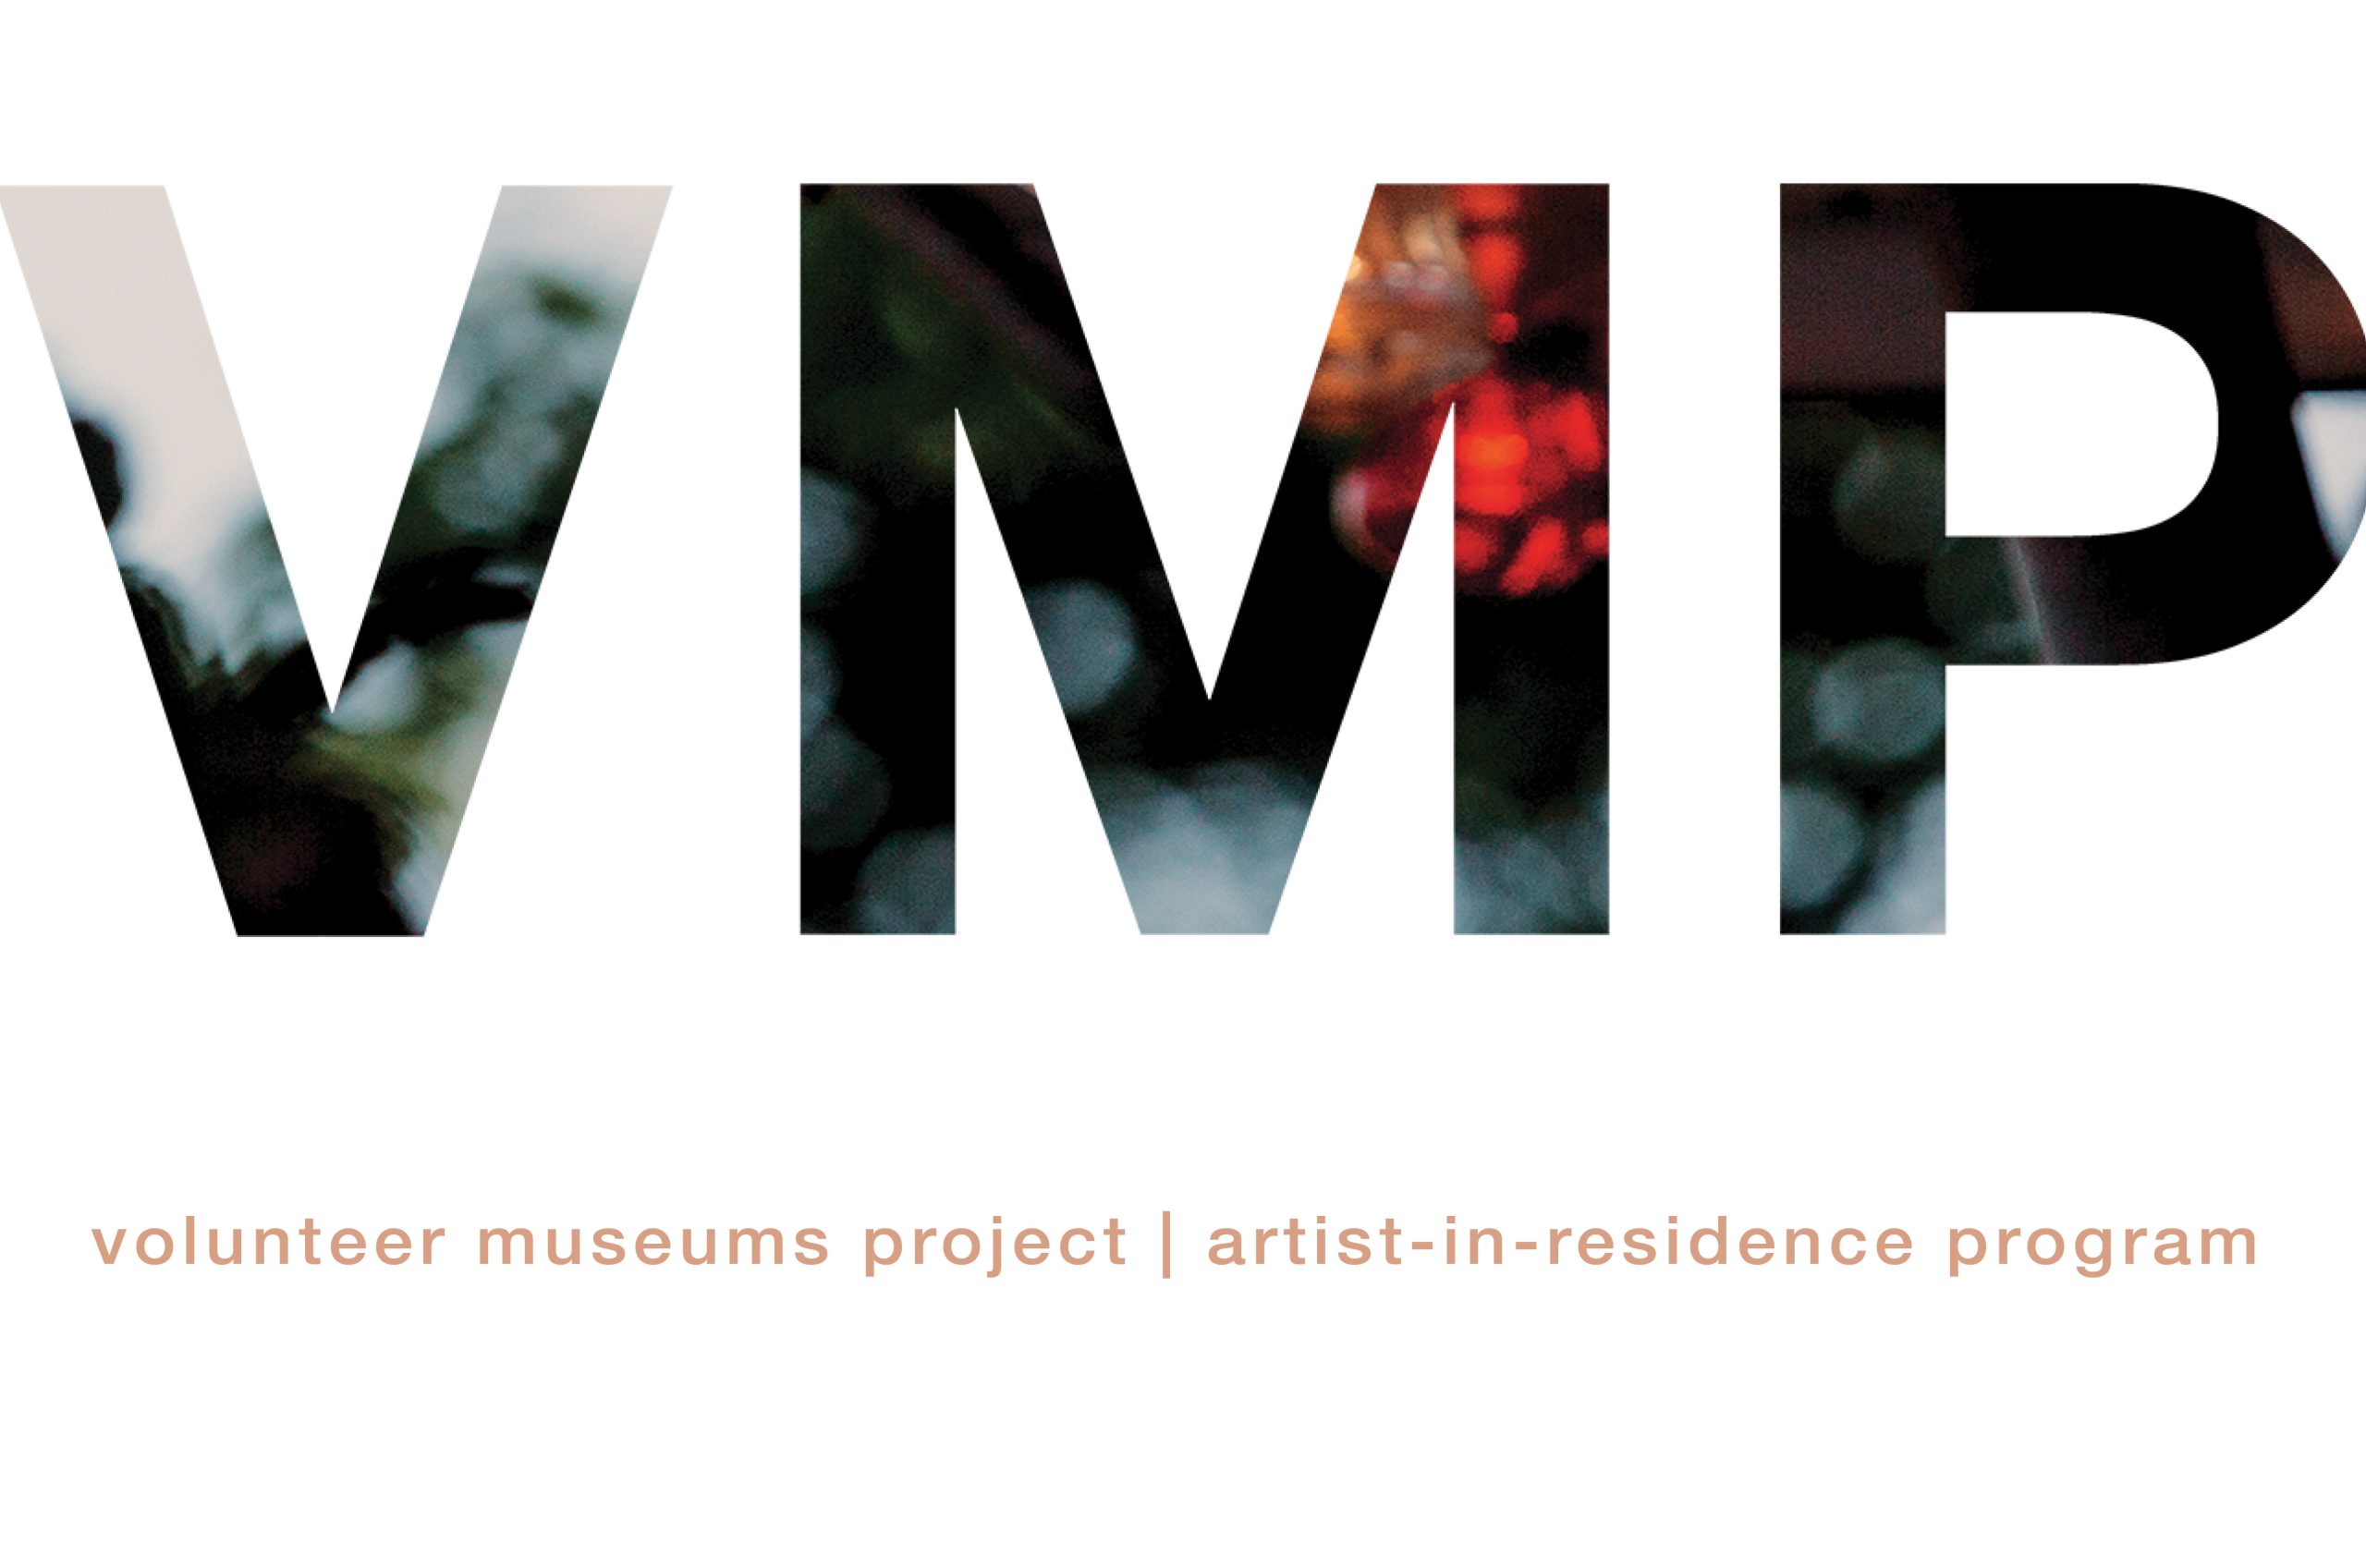 VMP – Volunteer Museums Project